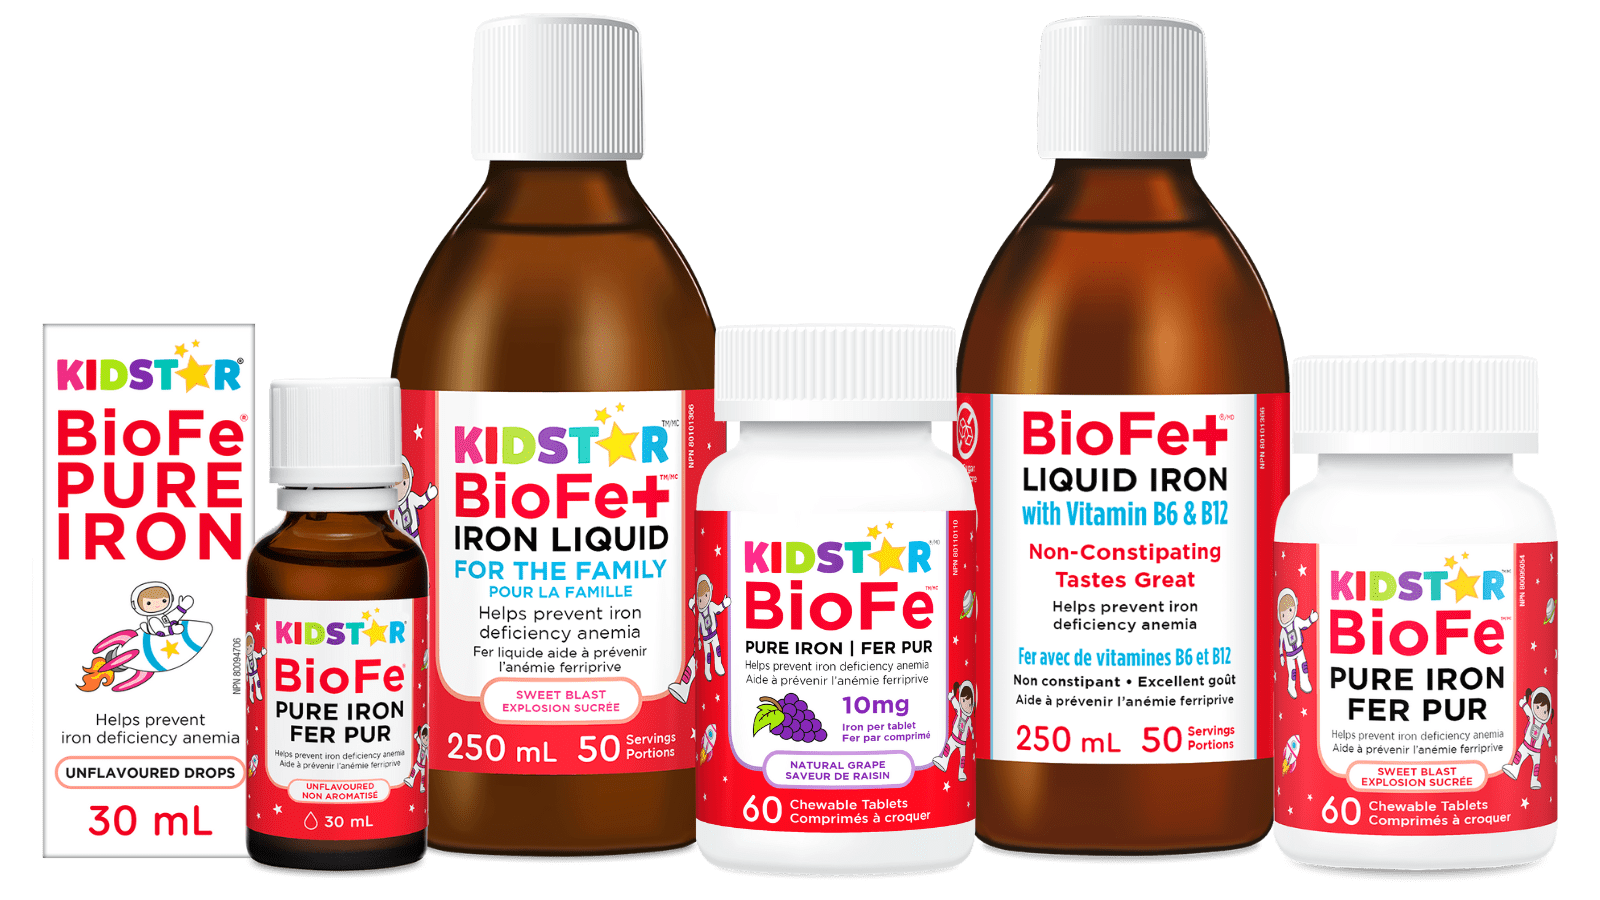 Gamme de produits BioFe Iron, comprenant BioFe à croquer, BioFe Grape à croquer, BioFe gouttes de fer pur, BioFe+ fer liquide pour la famille et BioFe+ Liquid Iron avec B6 et B12.